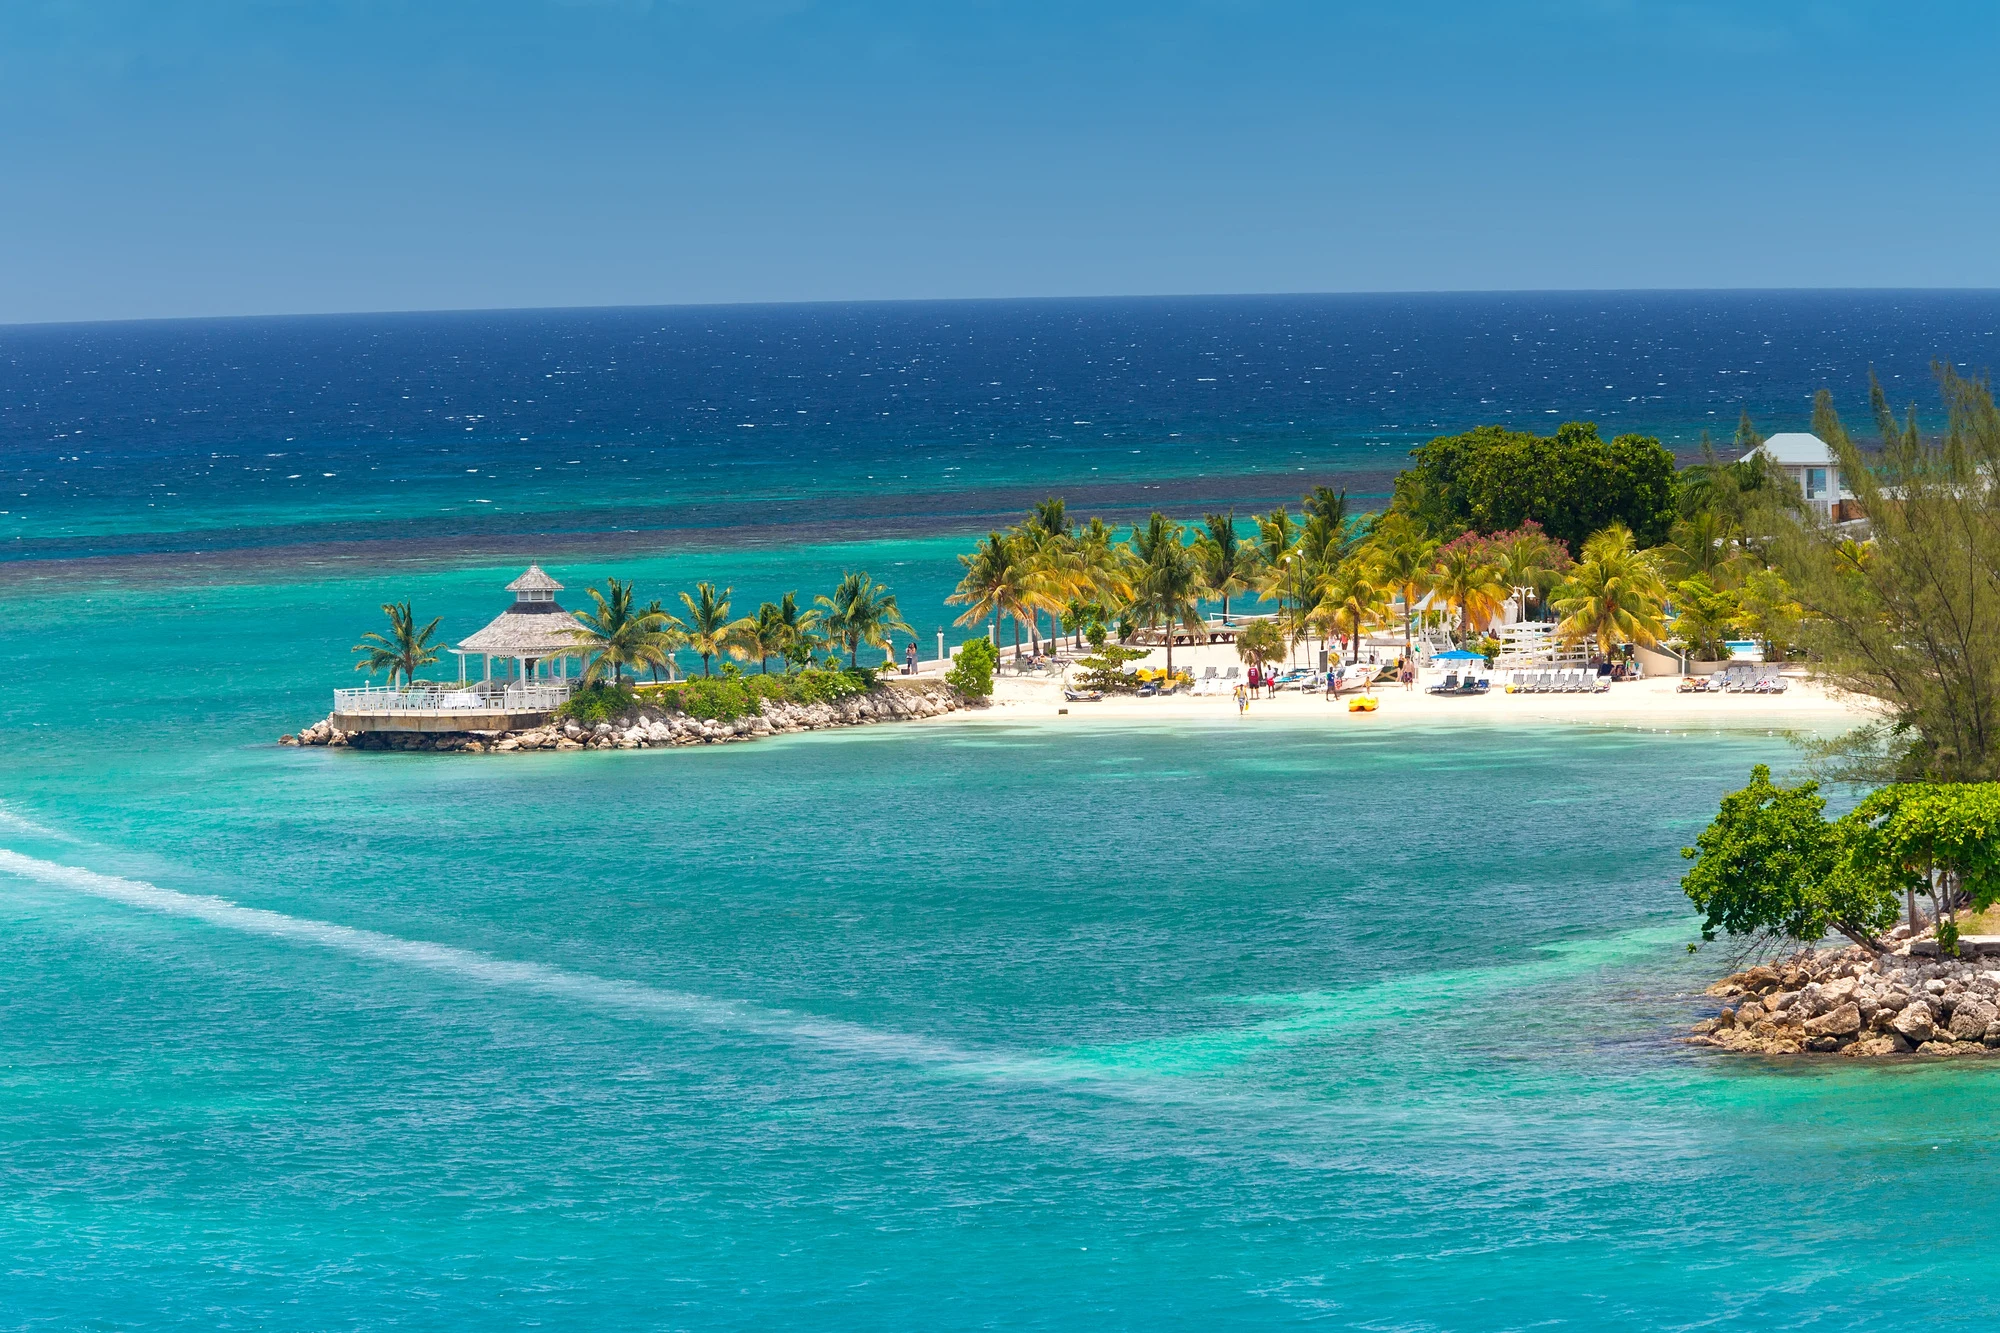 The lovely tropical island of Ocho Rios, Jamaica in the Caribbean